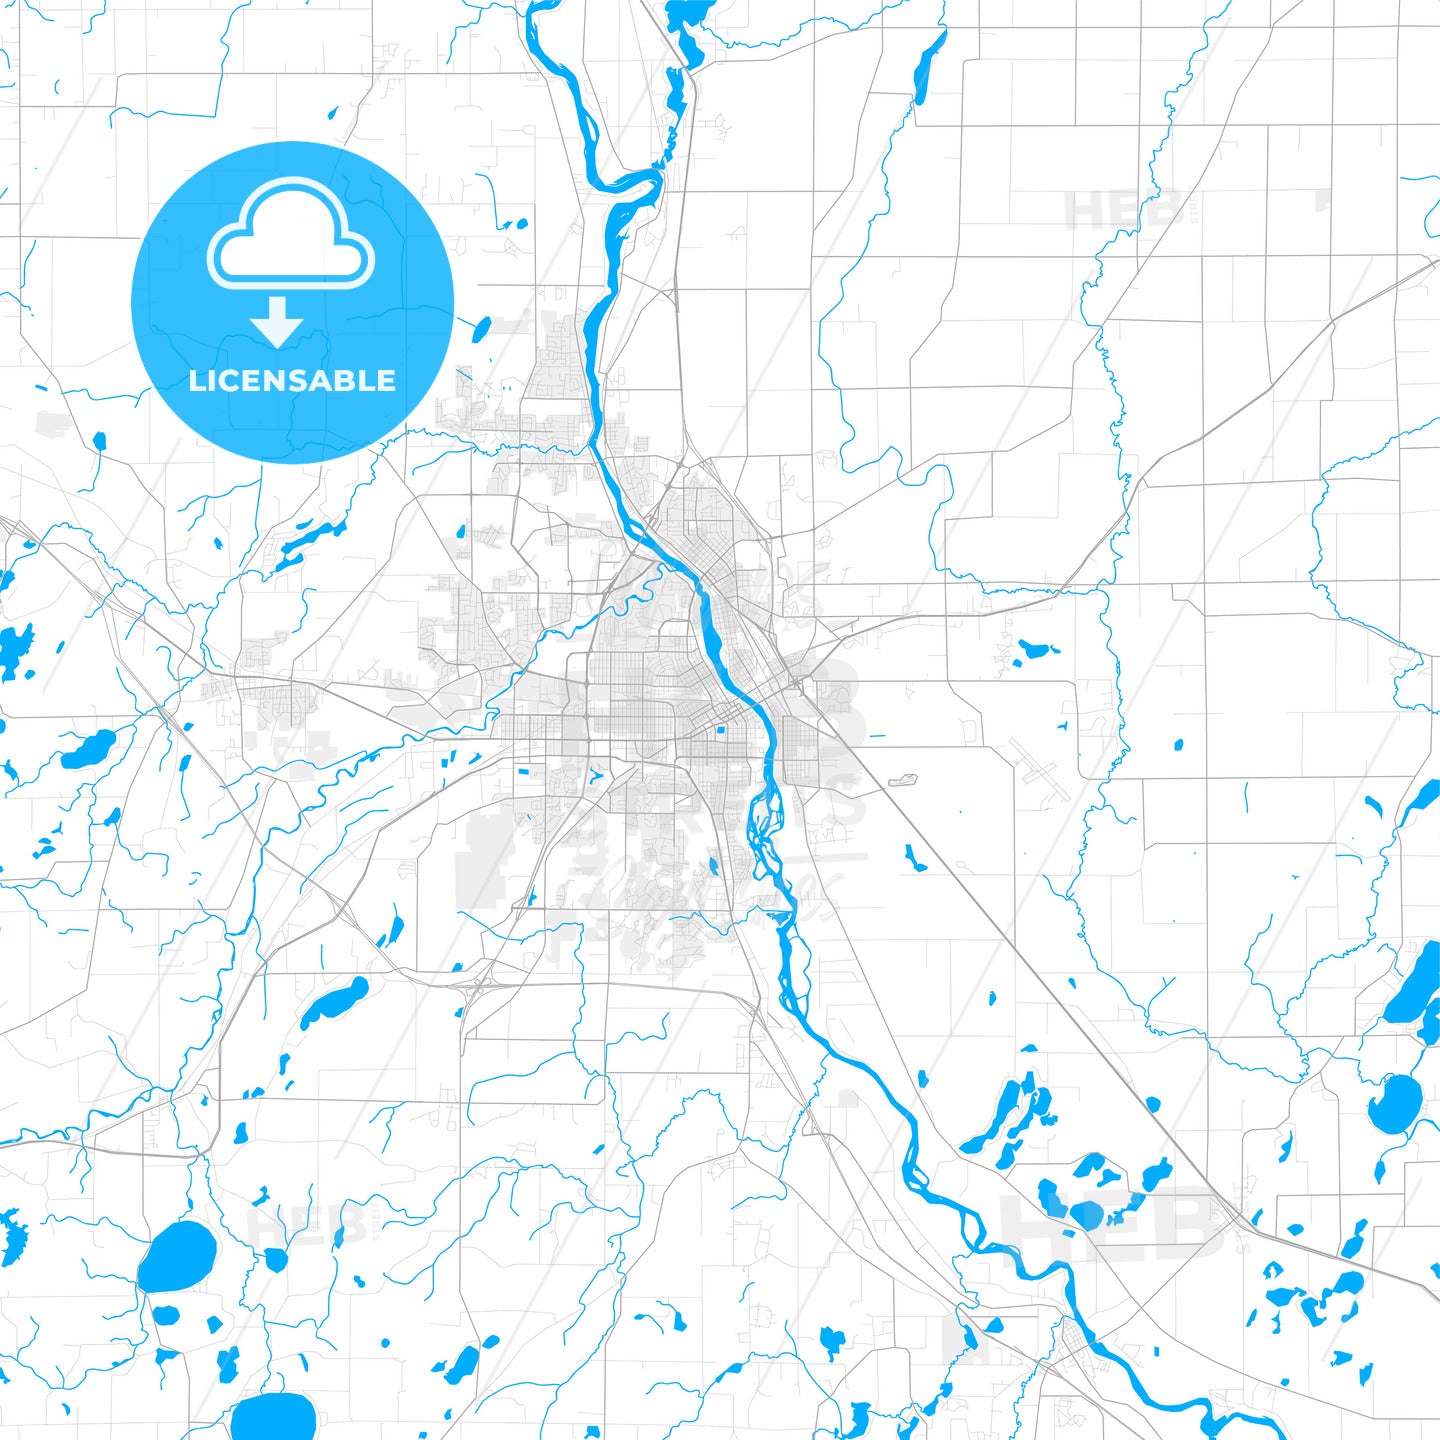 Rich detailed vector map of St. Cloud, Minnesota, USA